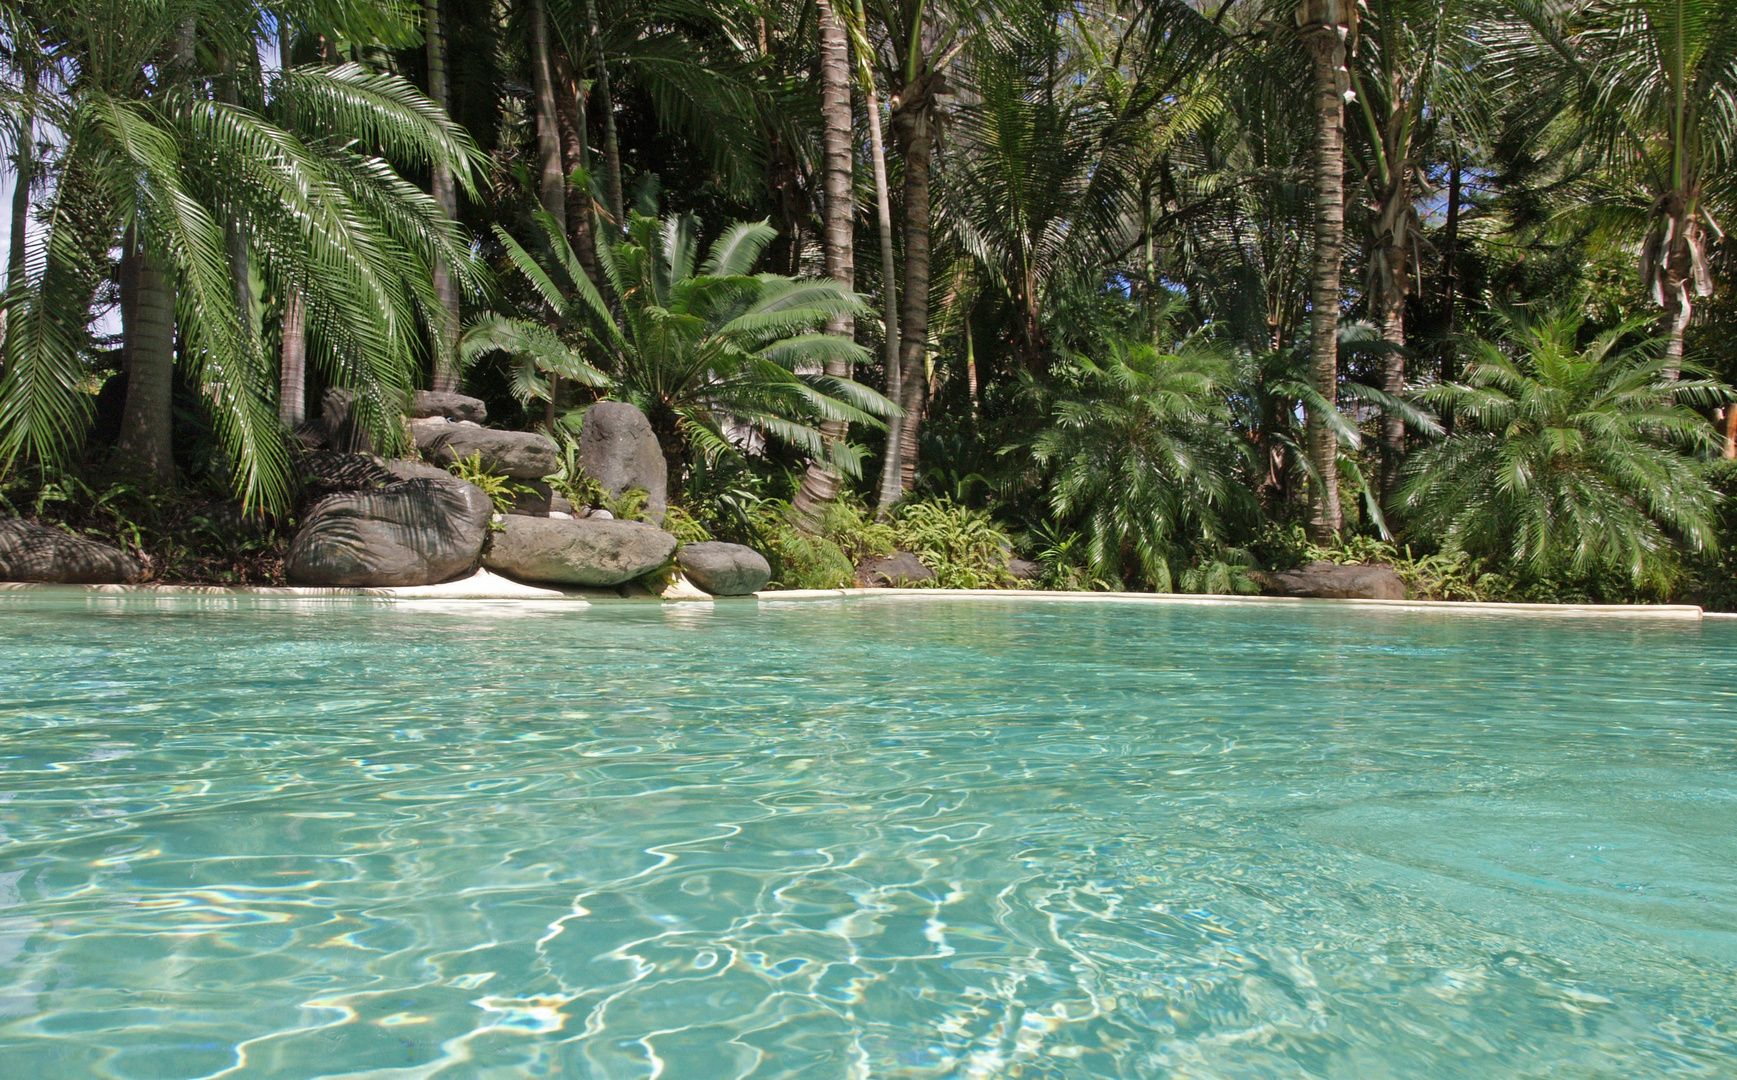 Hotel Ramada Plaza Nouméa - Vue sur la piscine cristalline et le jardin.